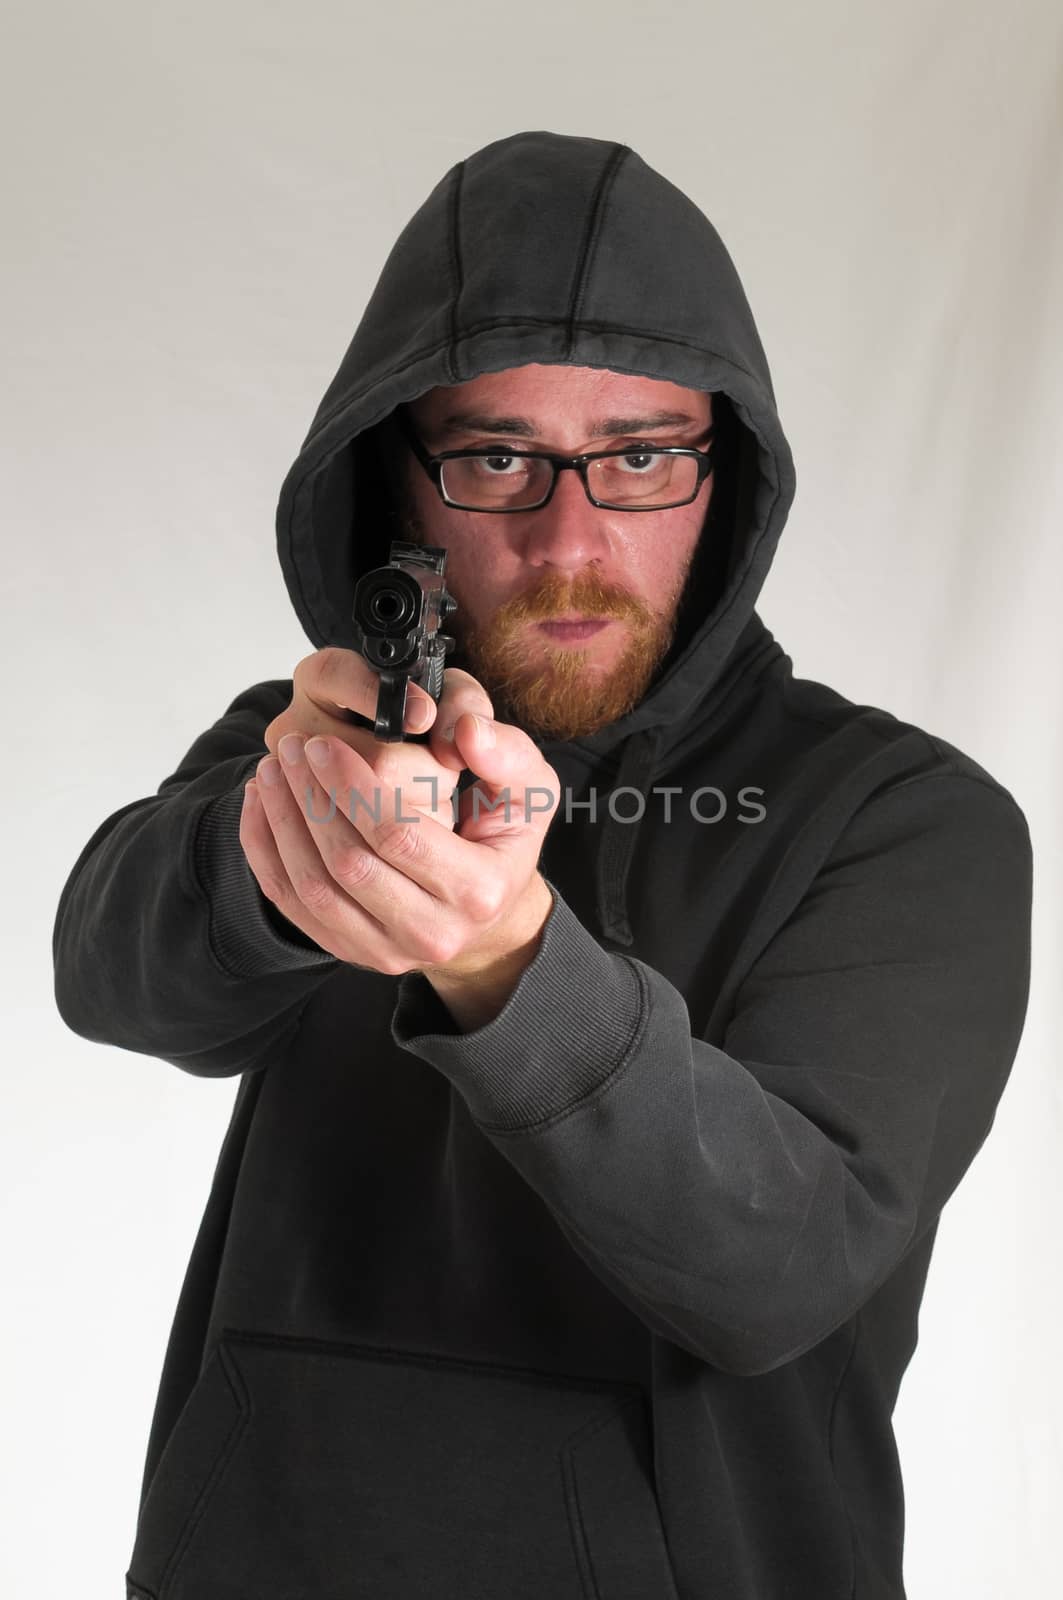 Black Dressed Young Man Holding a Pistol Gun